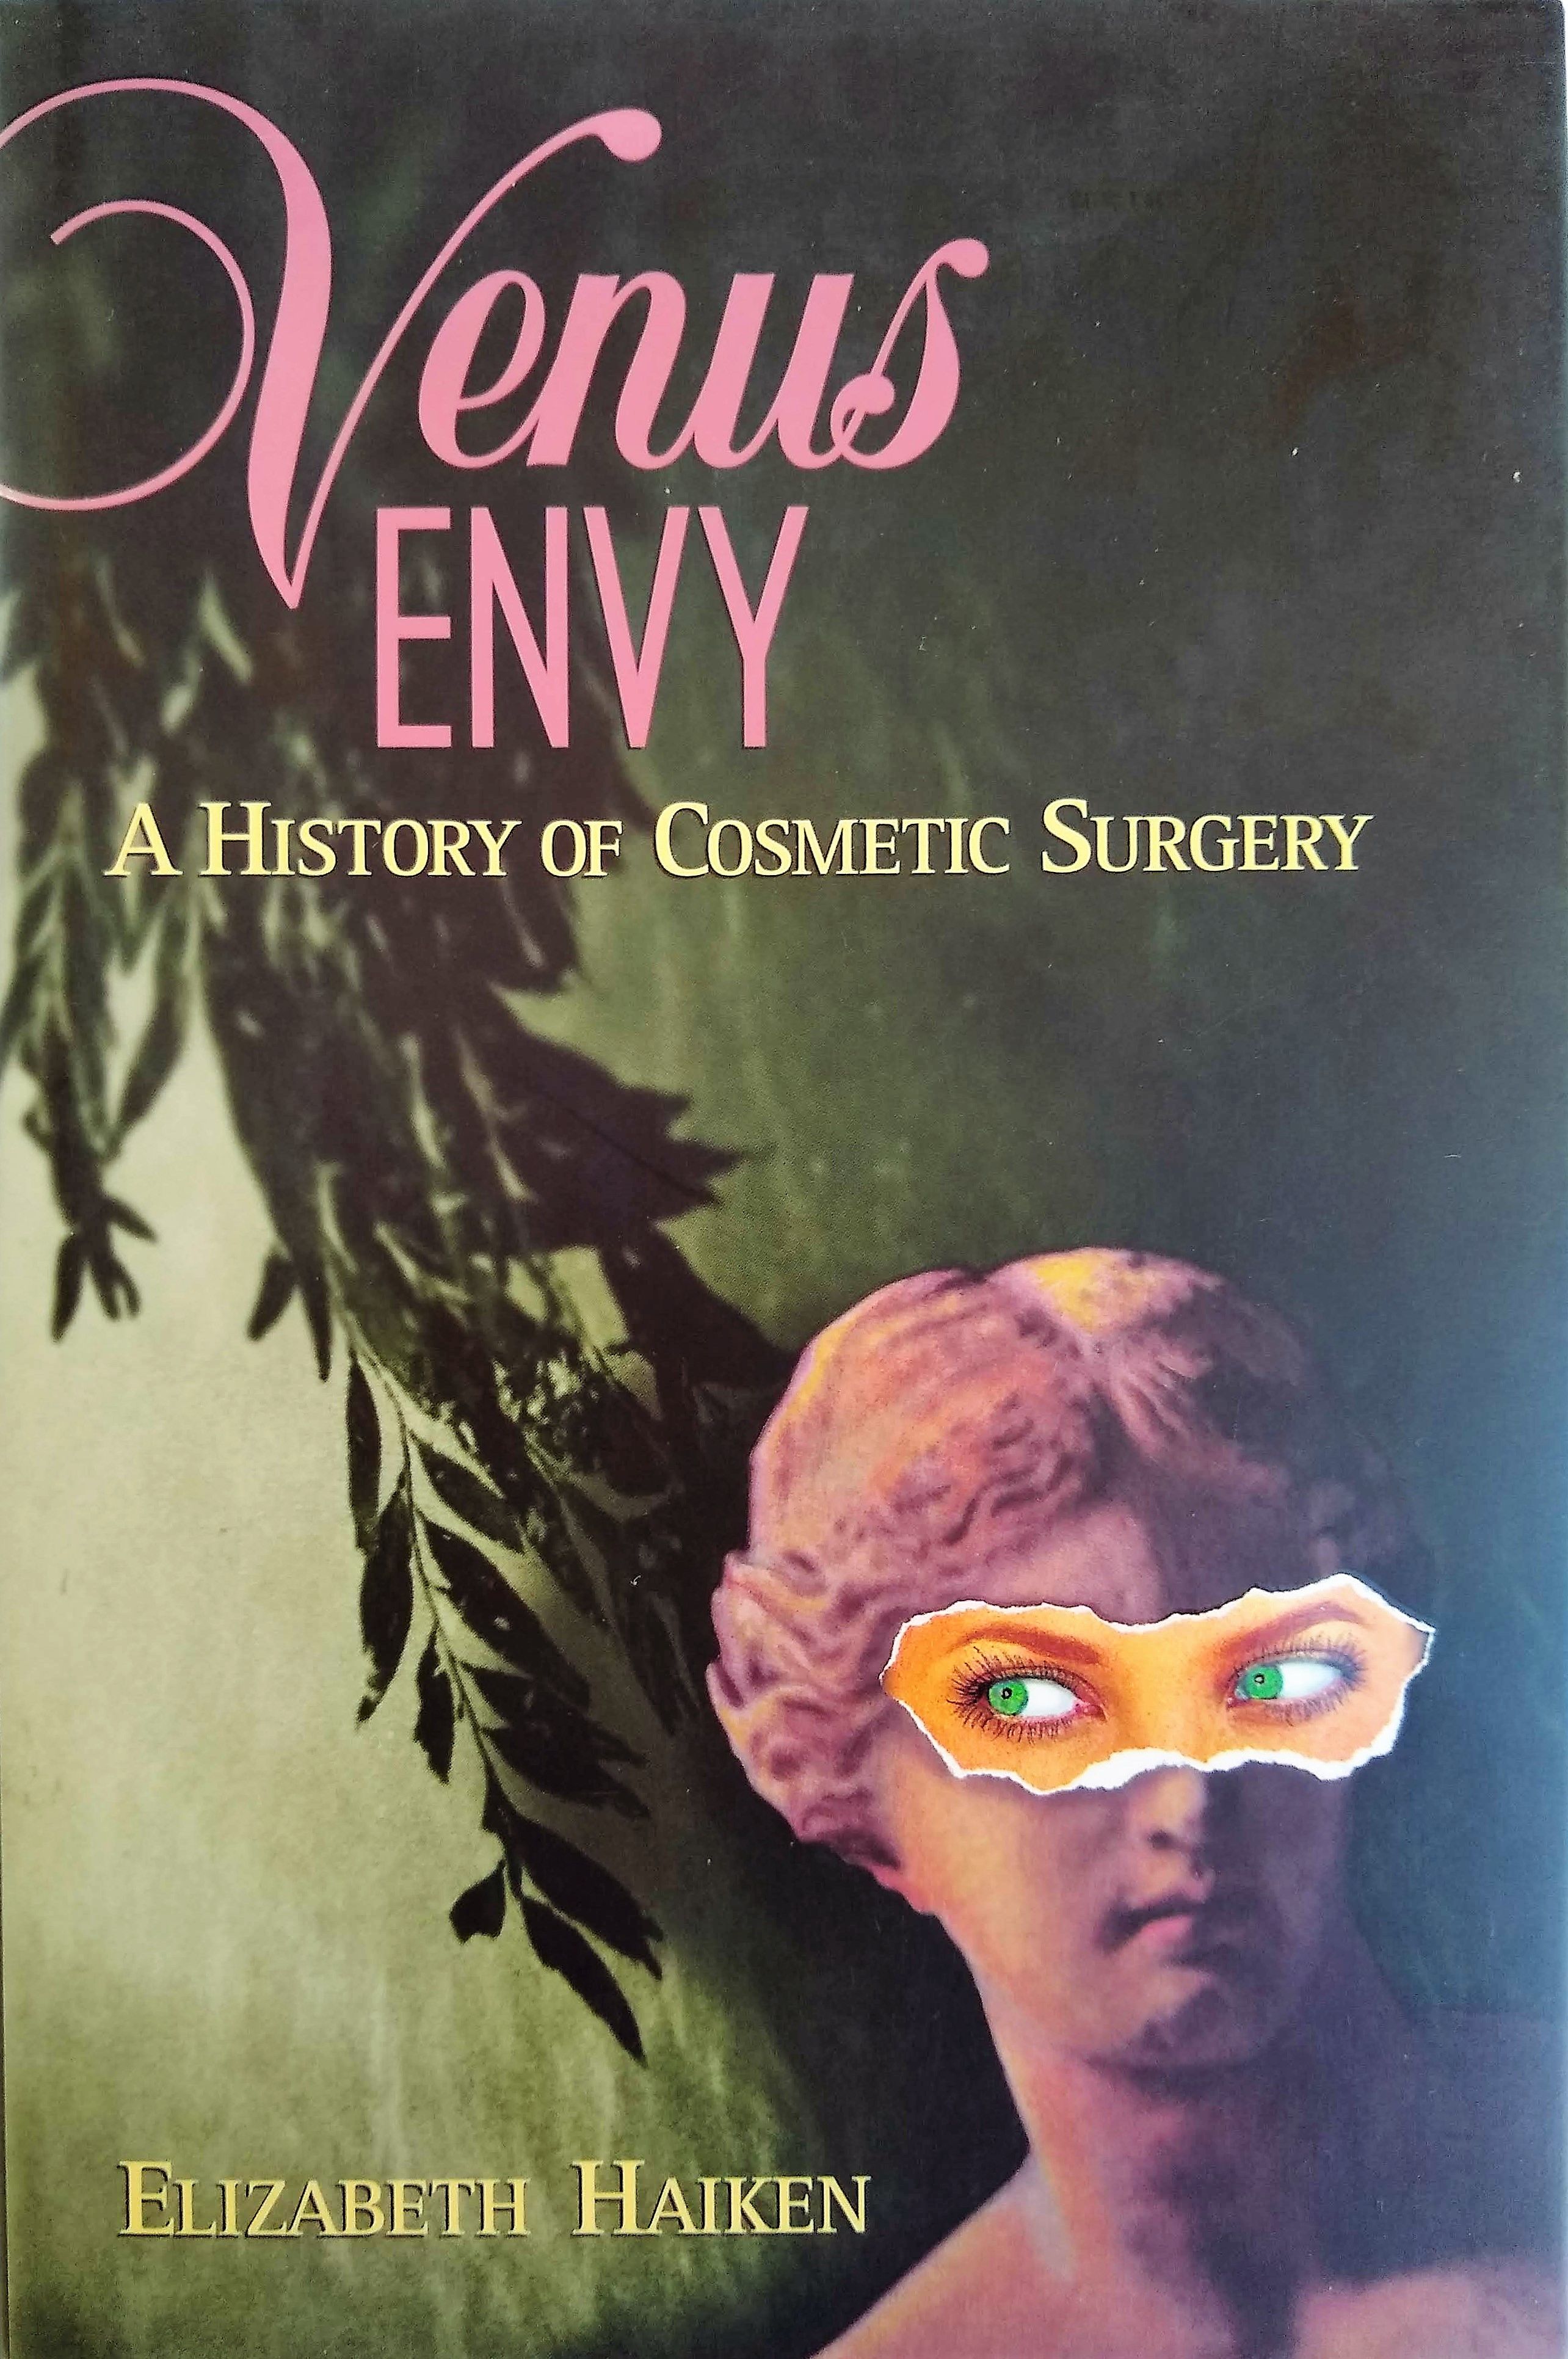 Venus Envy: A History of Cosmetic Surgery. A History of Cosmetic Surgery. - HAIKEN, Elizabeth (b. 1962).